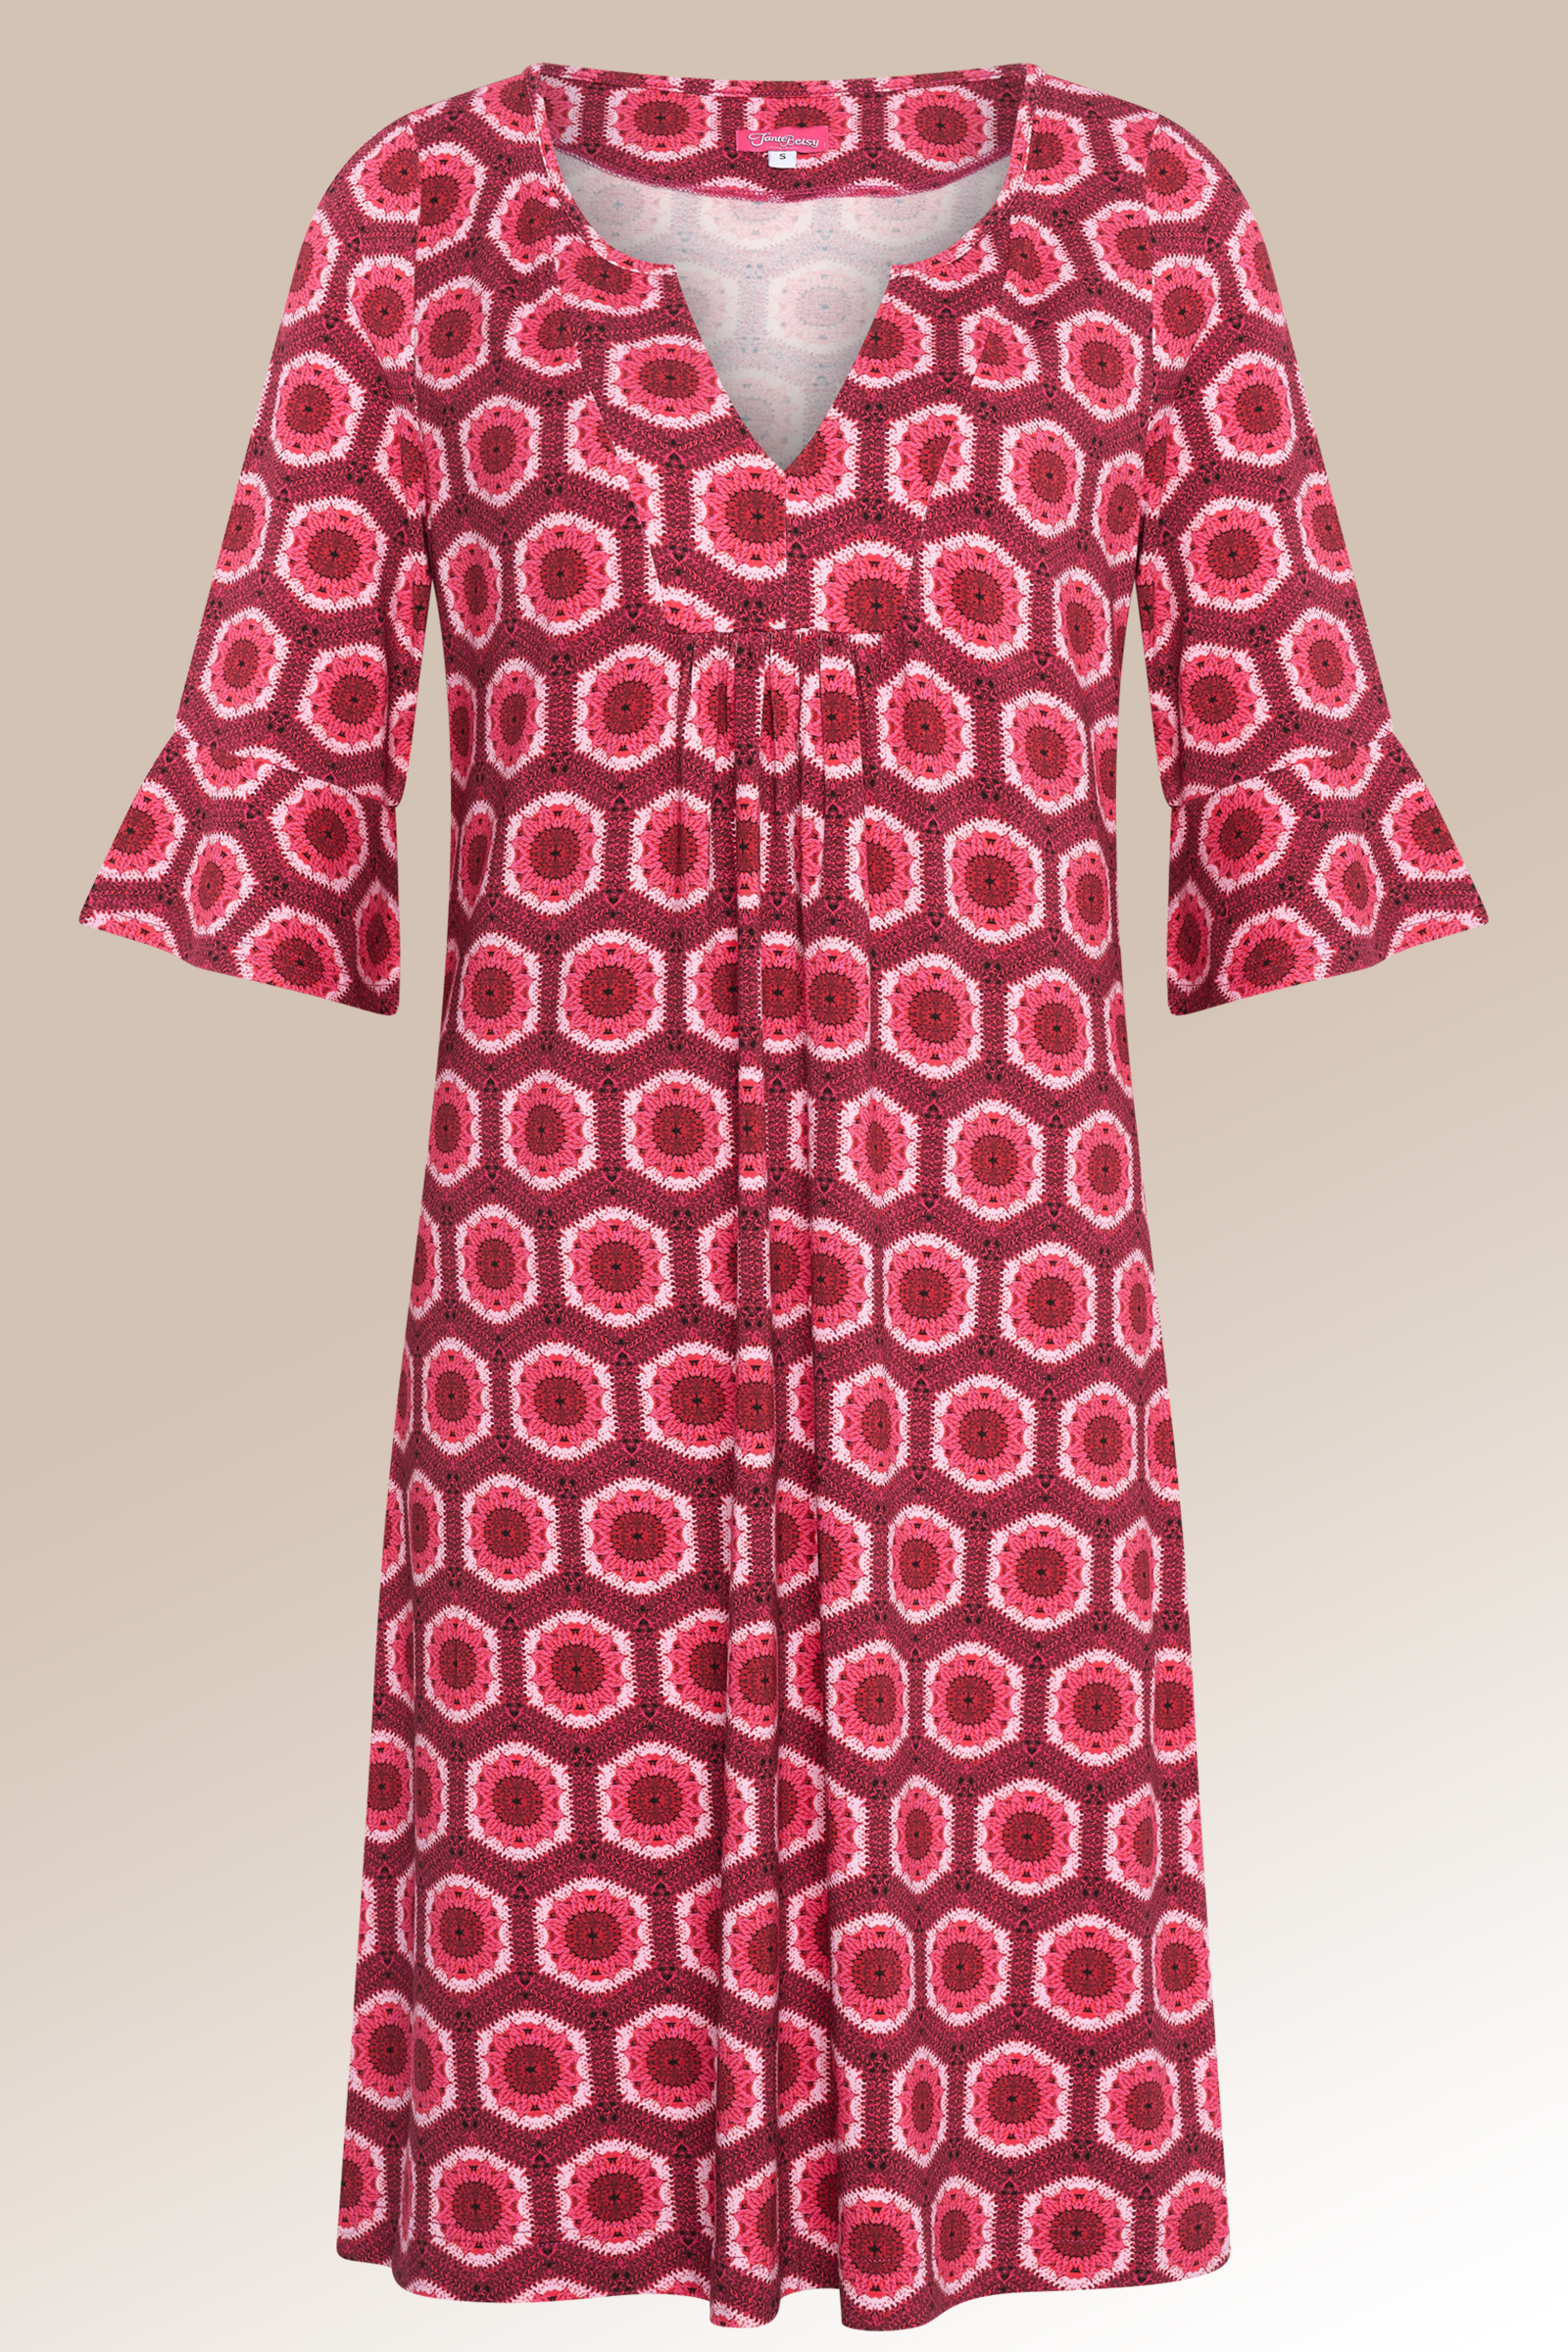 Tunic Dress Short Sleeves Crochet Flower Pink